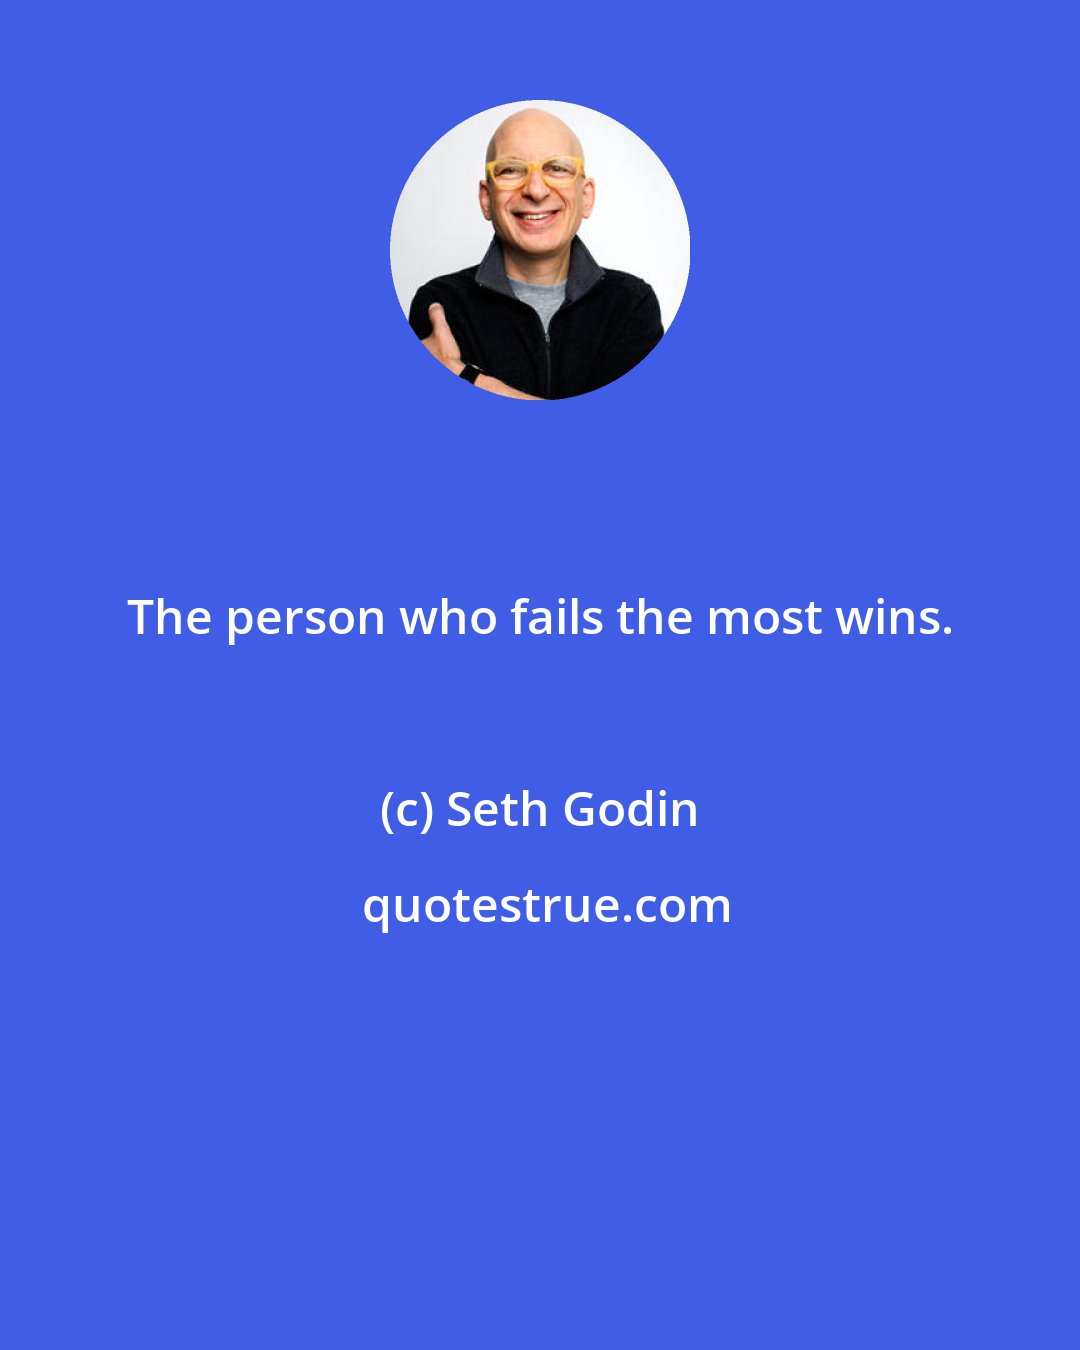 Seth Godin: The person who fails the most wins.